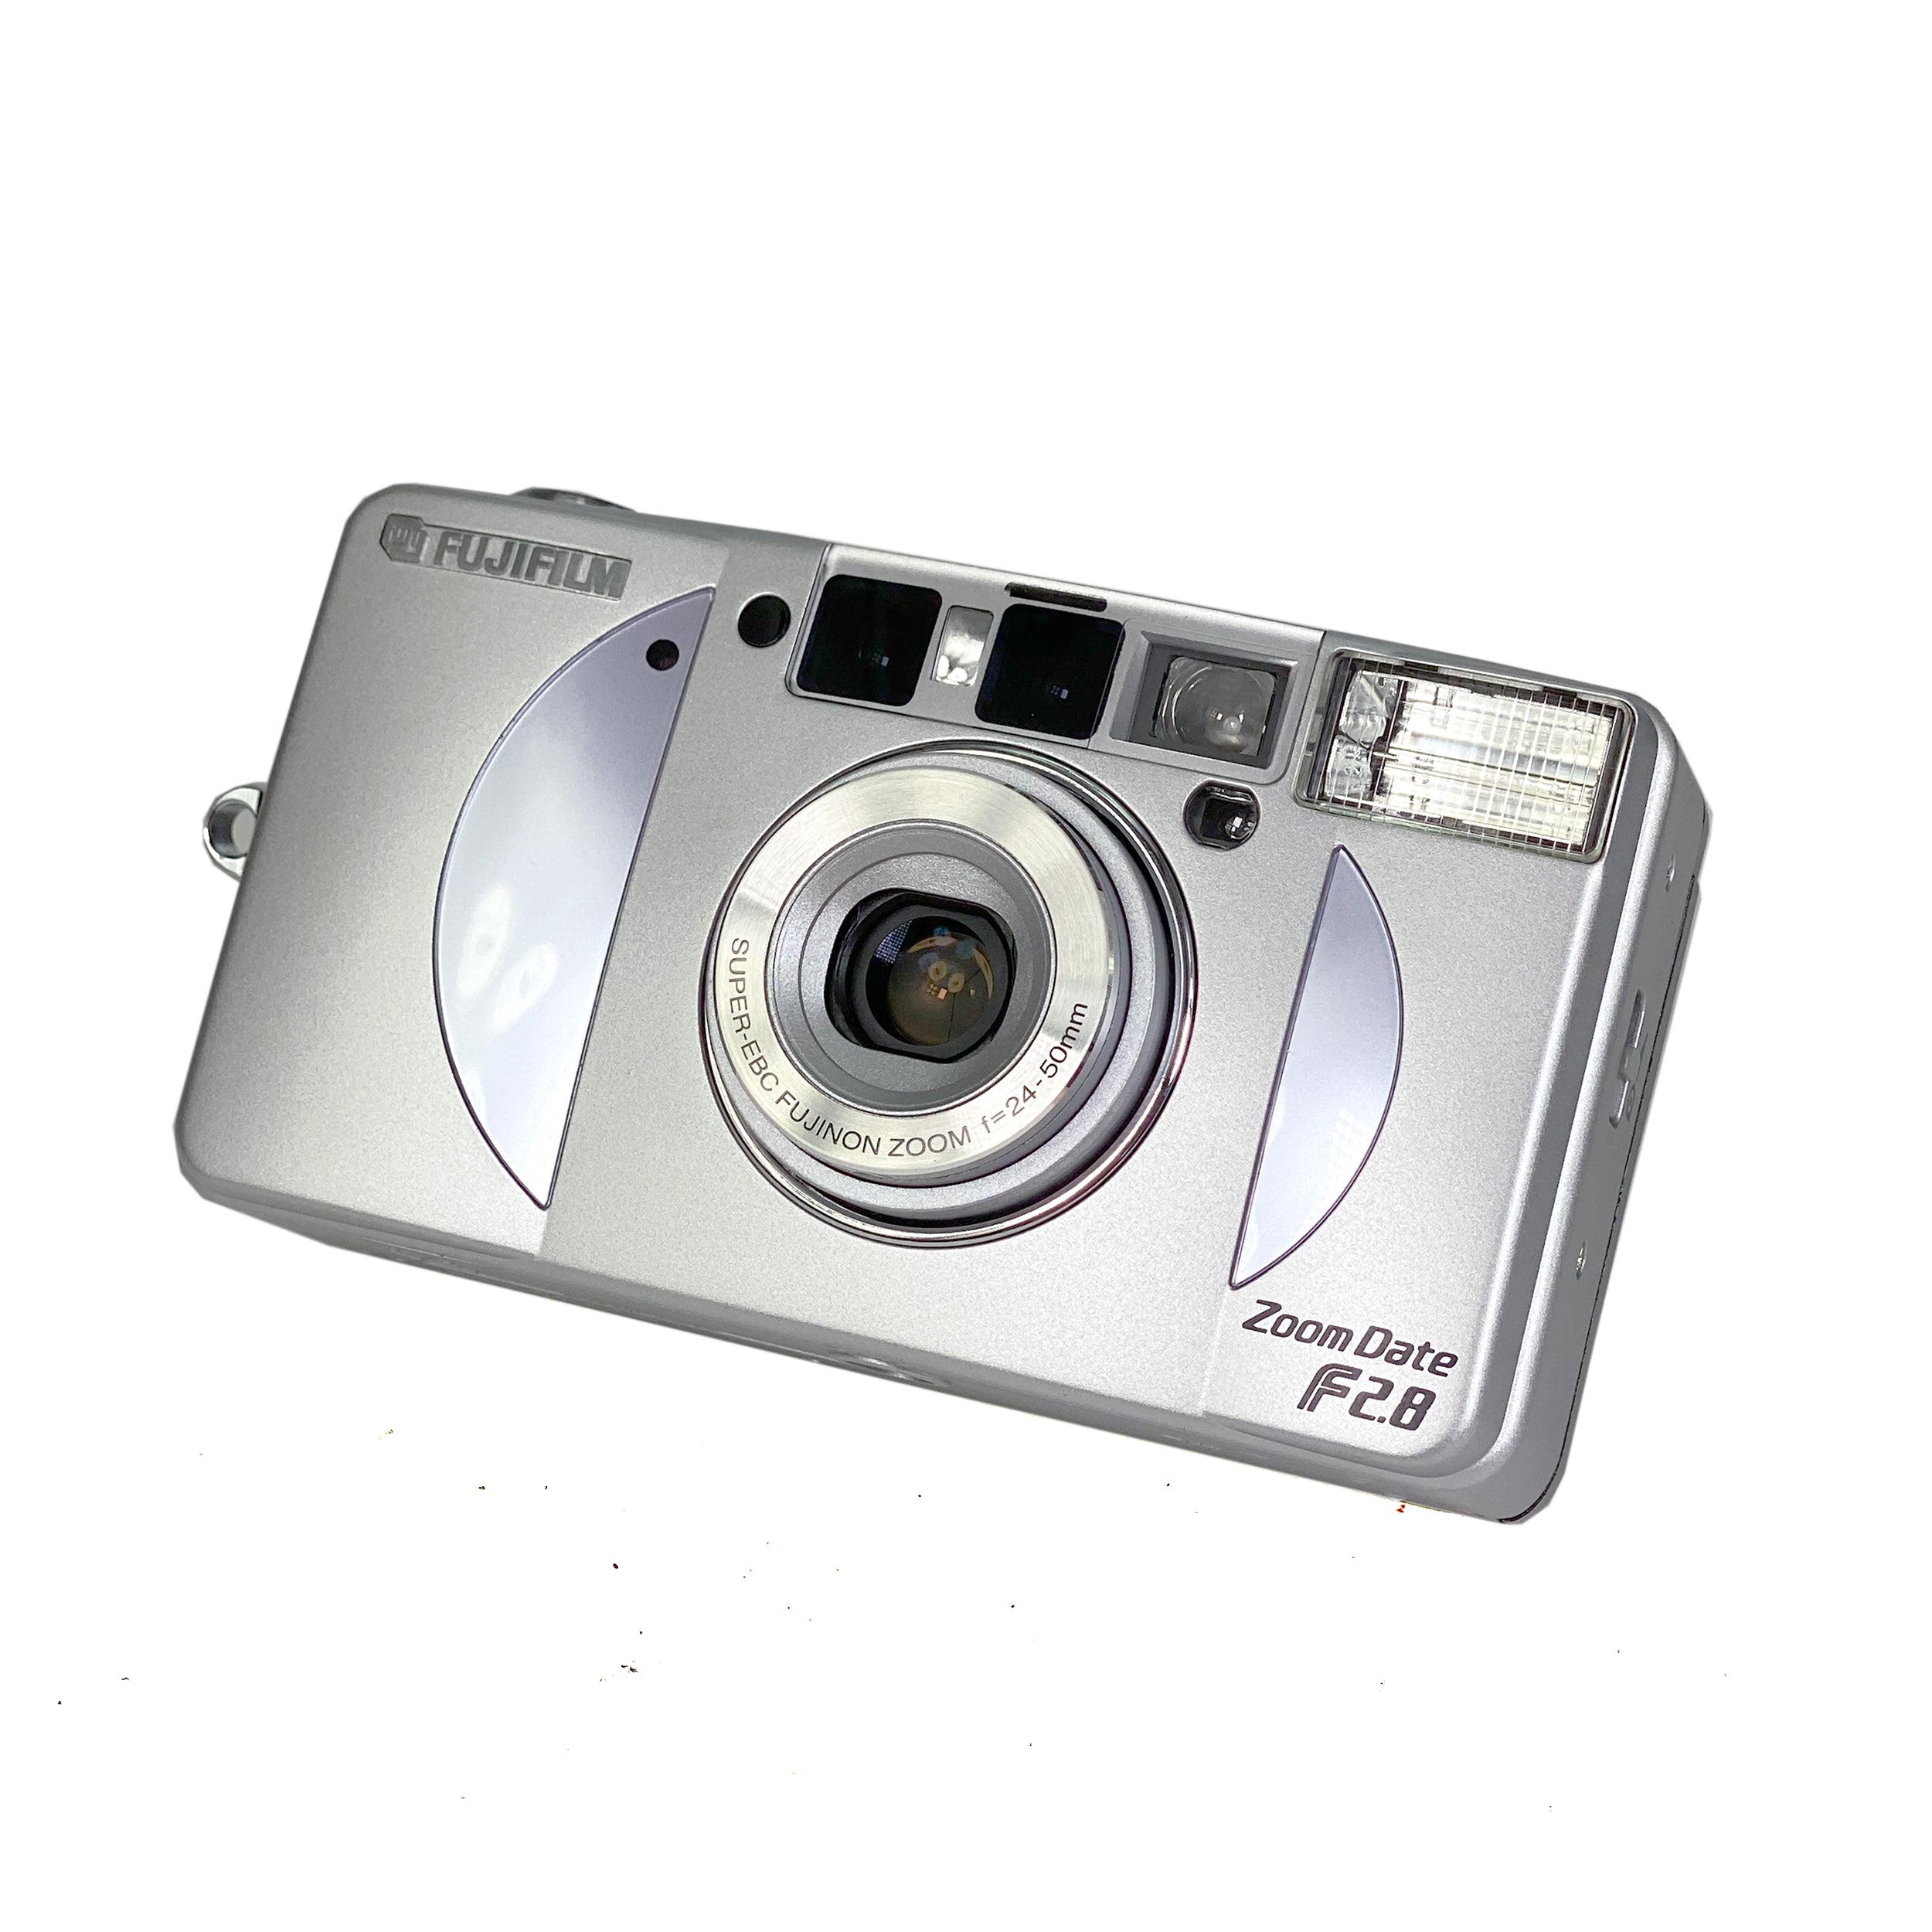 Fujifilm Zoom Date Silvi F2.8